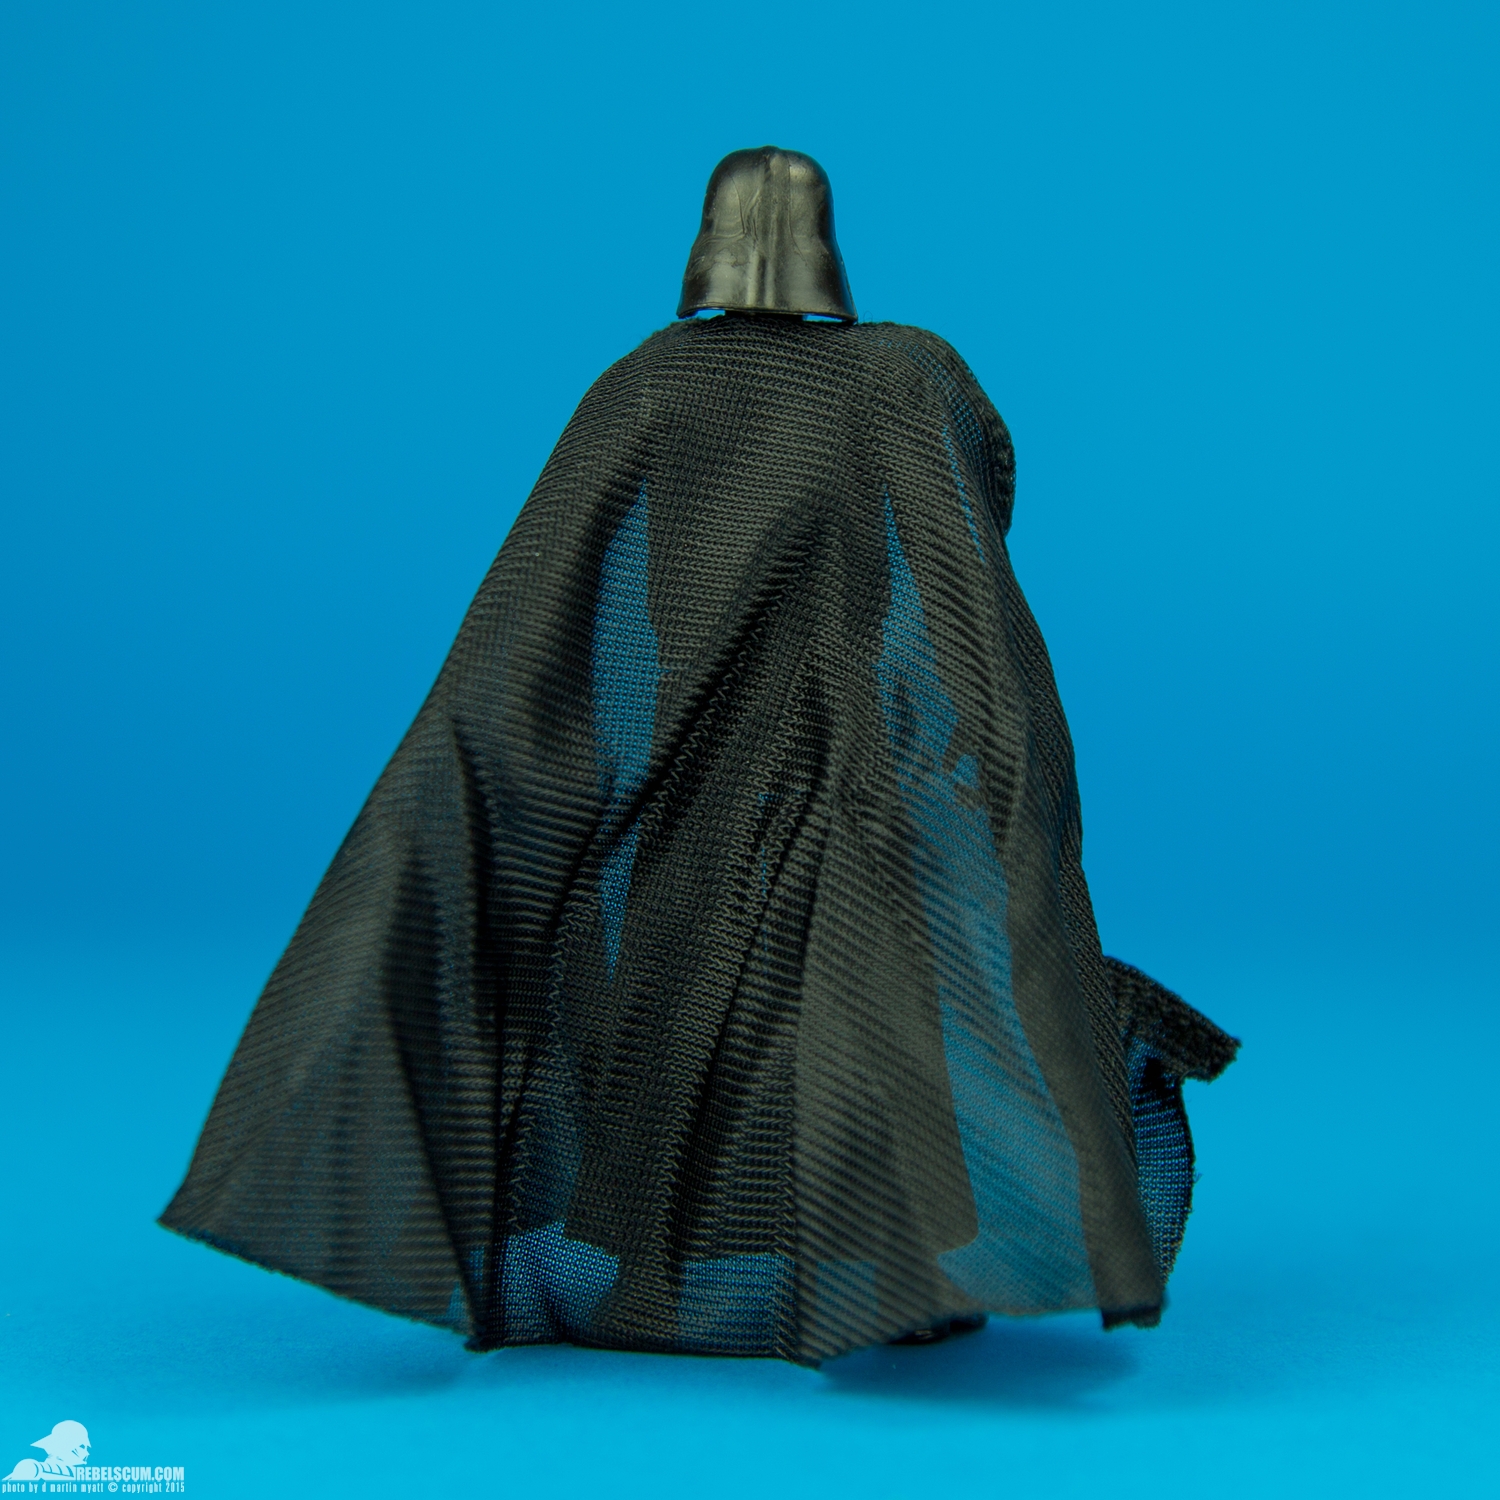 Darth-Vader-Star-Wars-The-Force-Awakens-Hasbro-004.jpg